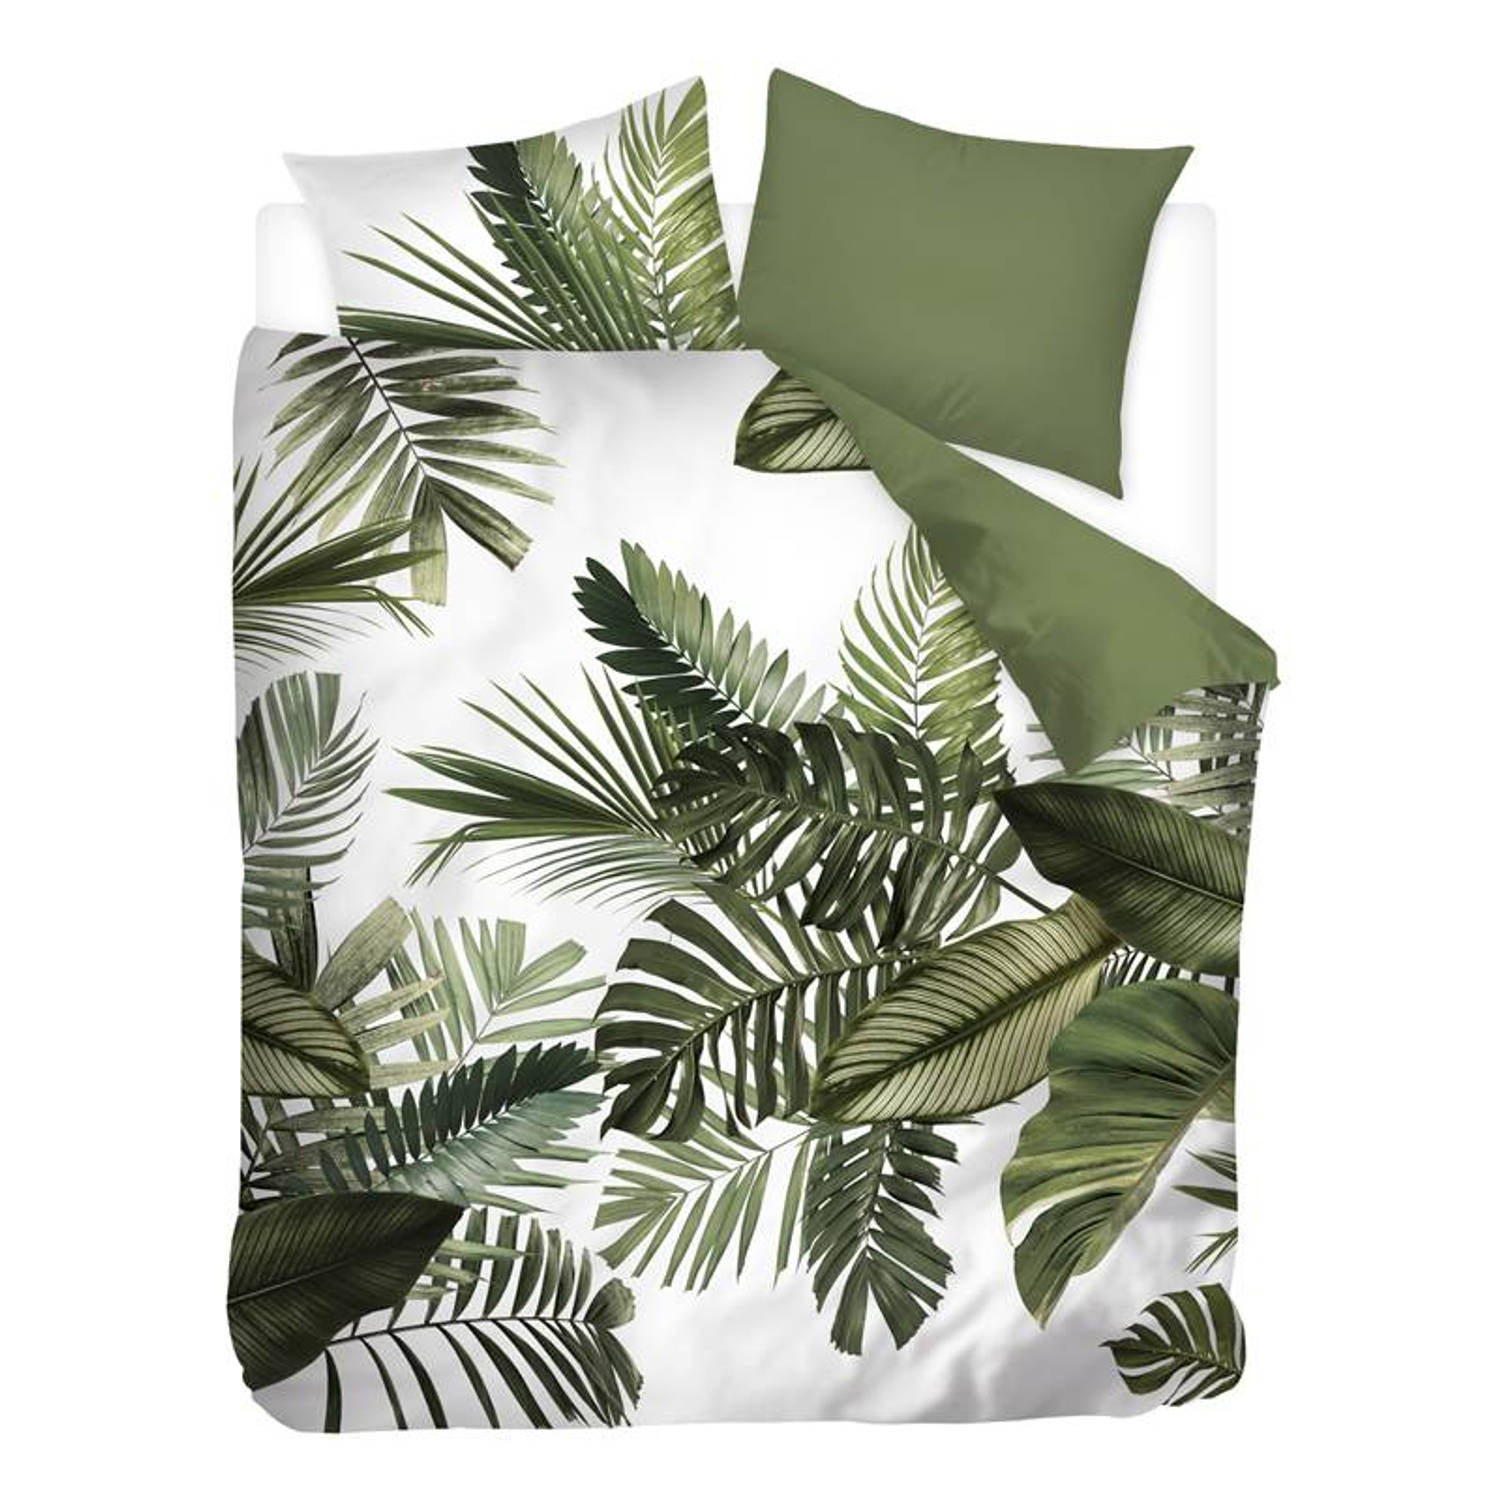 Snoozing - Snoozing Palm Leaves flanel dekbedovertrek